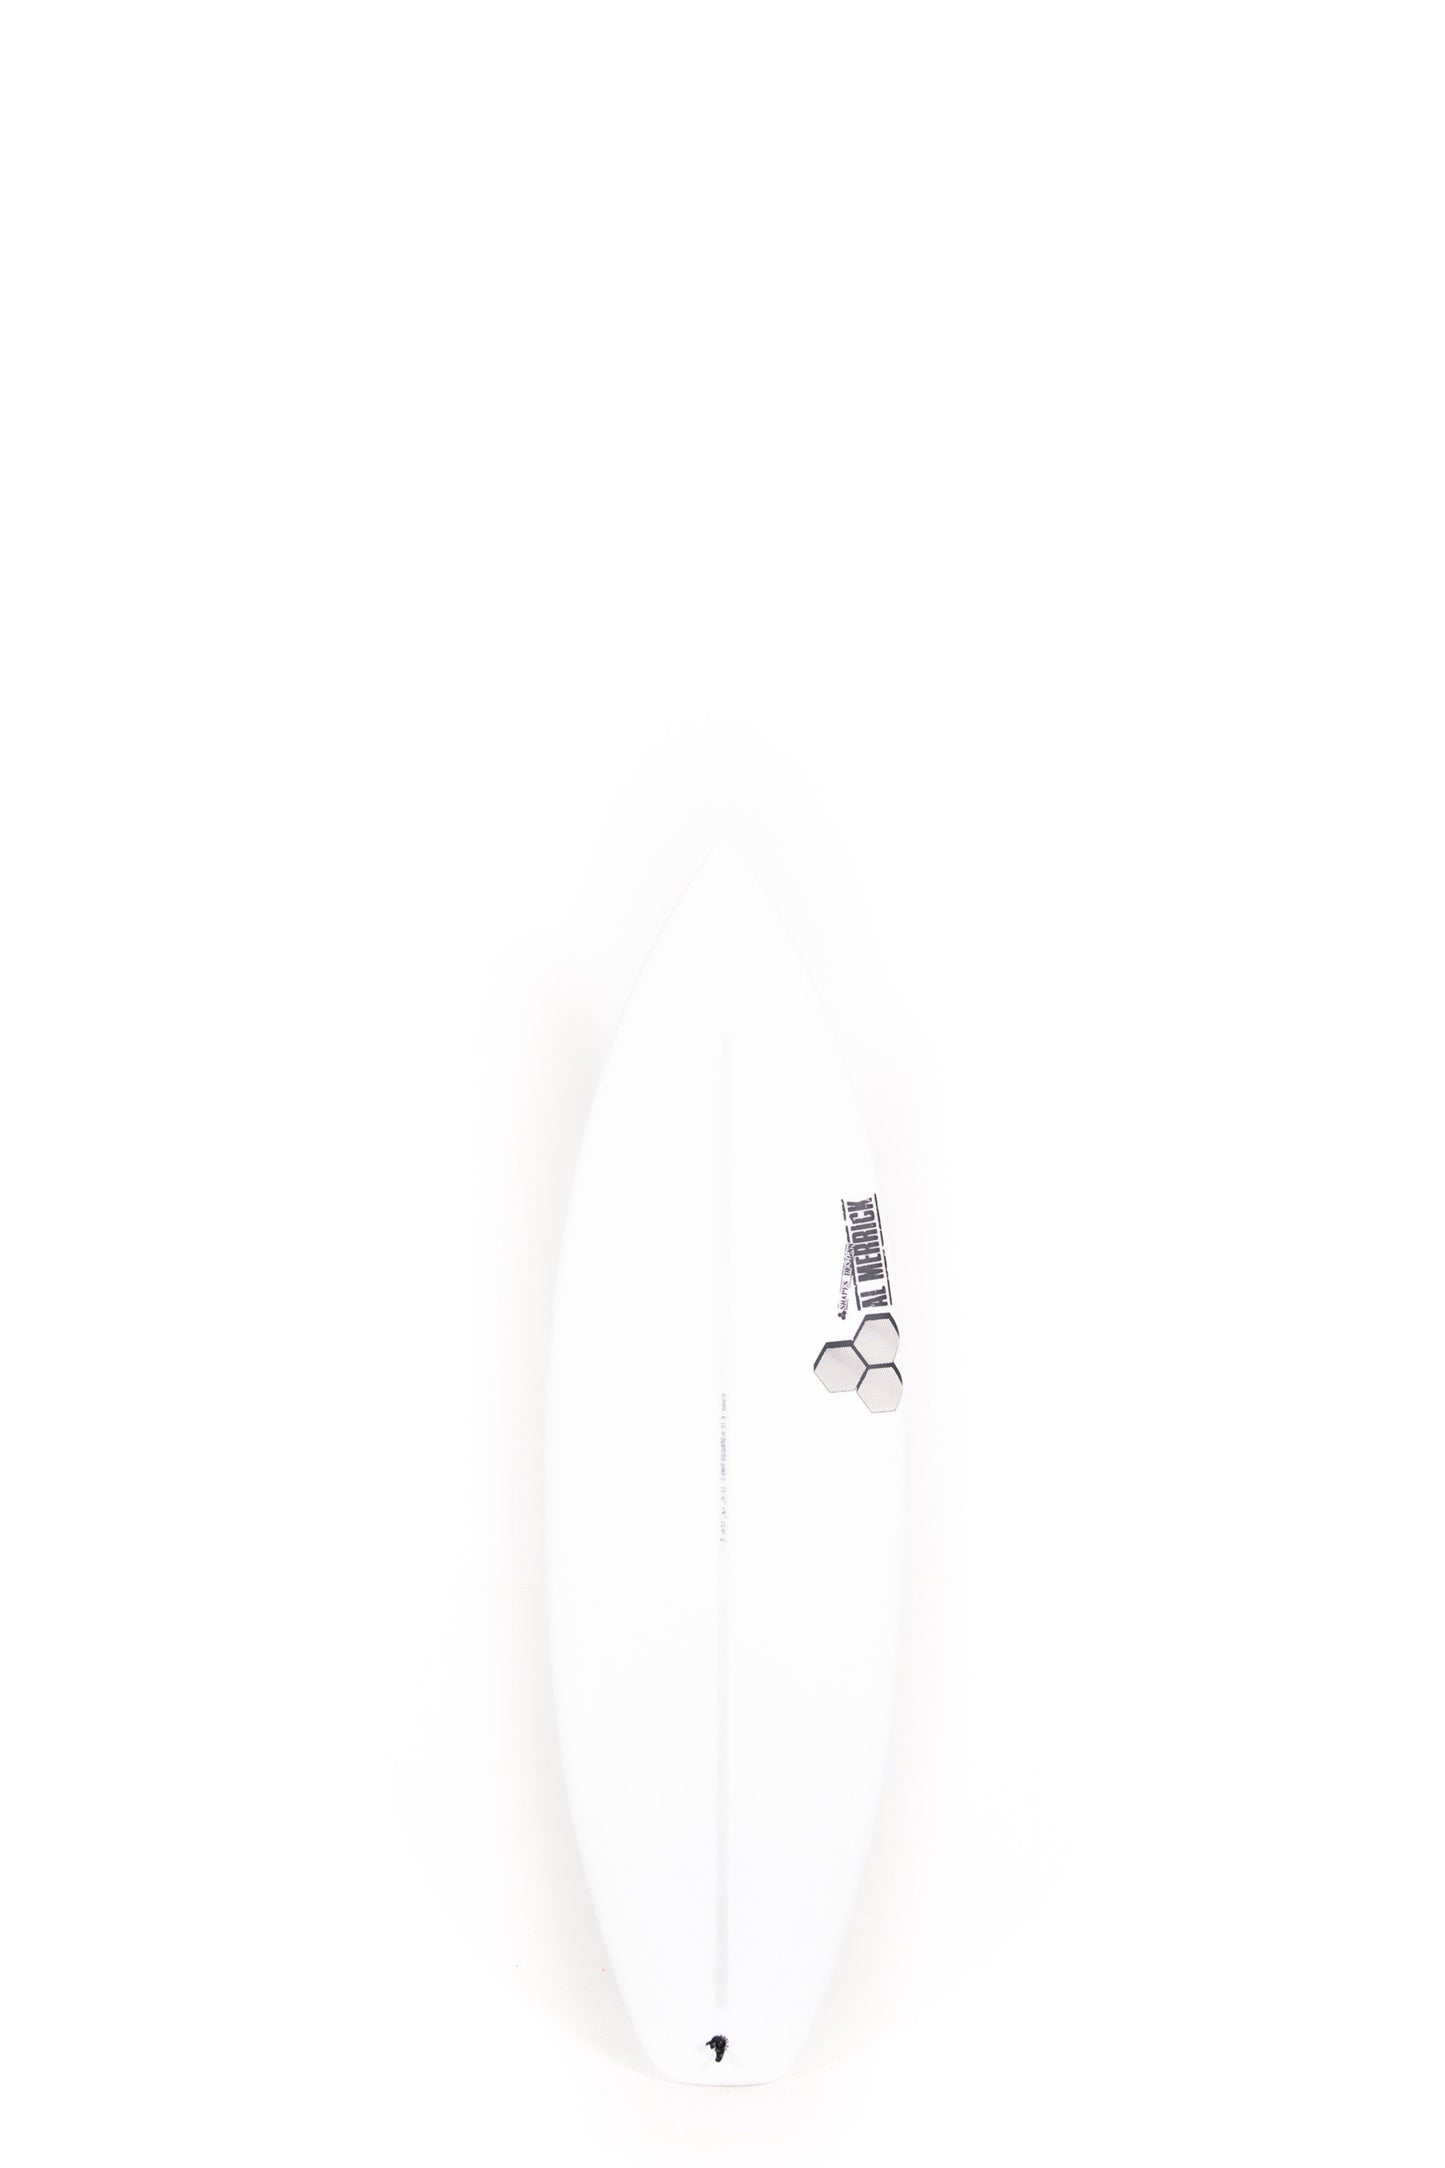 Pukas-Surf-Shop-Channel-Island-Surfboards-Dumpster-Diver-2-Al-Merrick-5_5